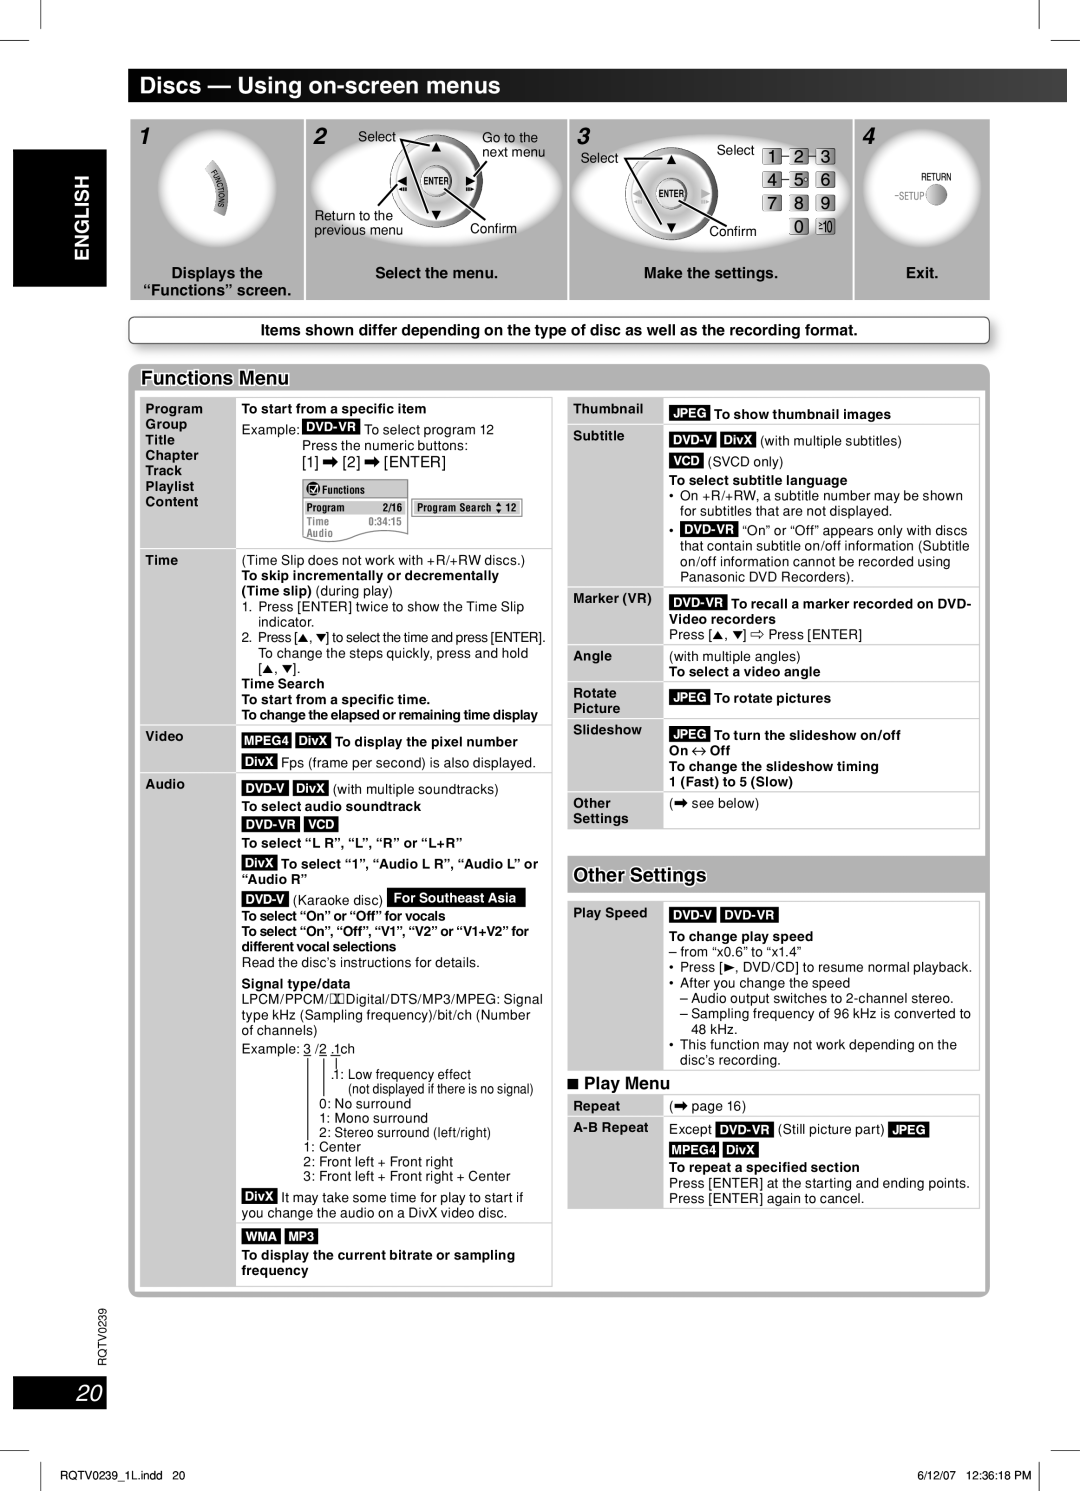 Panasonic SC-VK960 manual Discs - Using on-screenmenus, Functions Menu, Other Settings, Play Menu, English, Dansk Français 